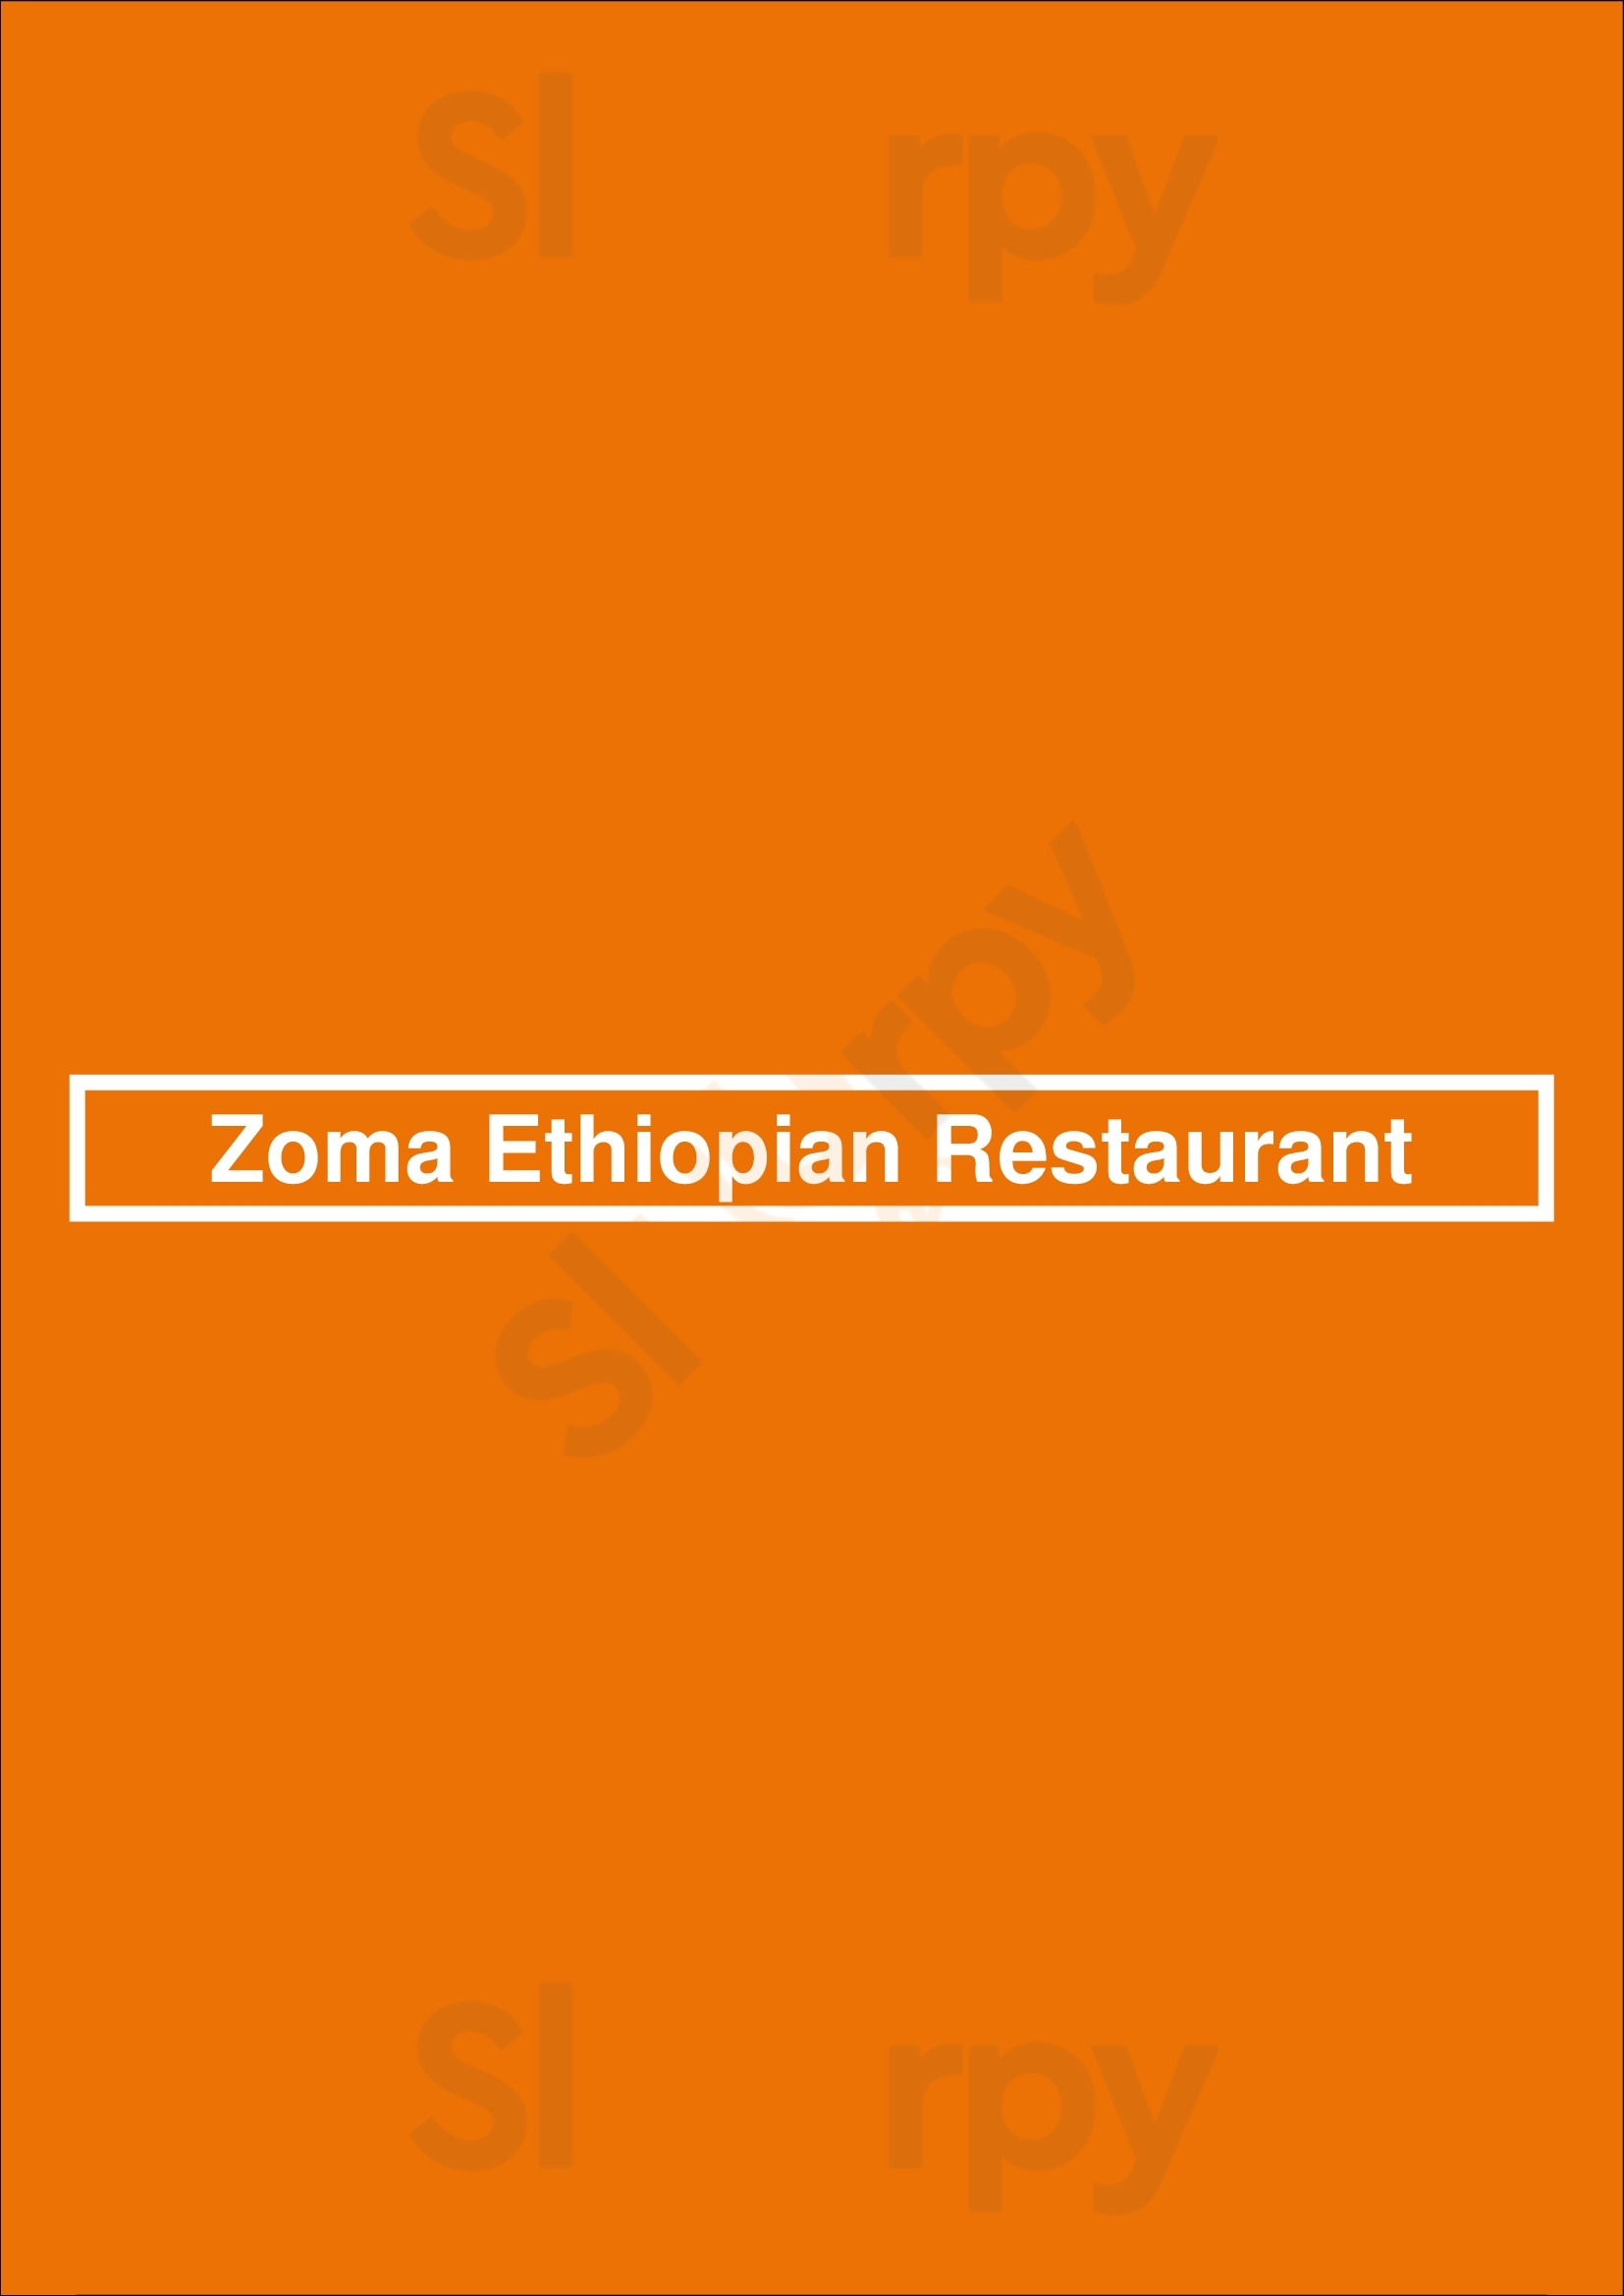 Zoma Ethiopian Restaurant Cleveland Heights Menu - 1